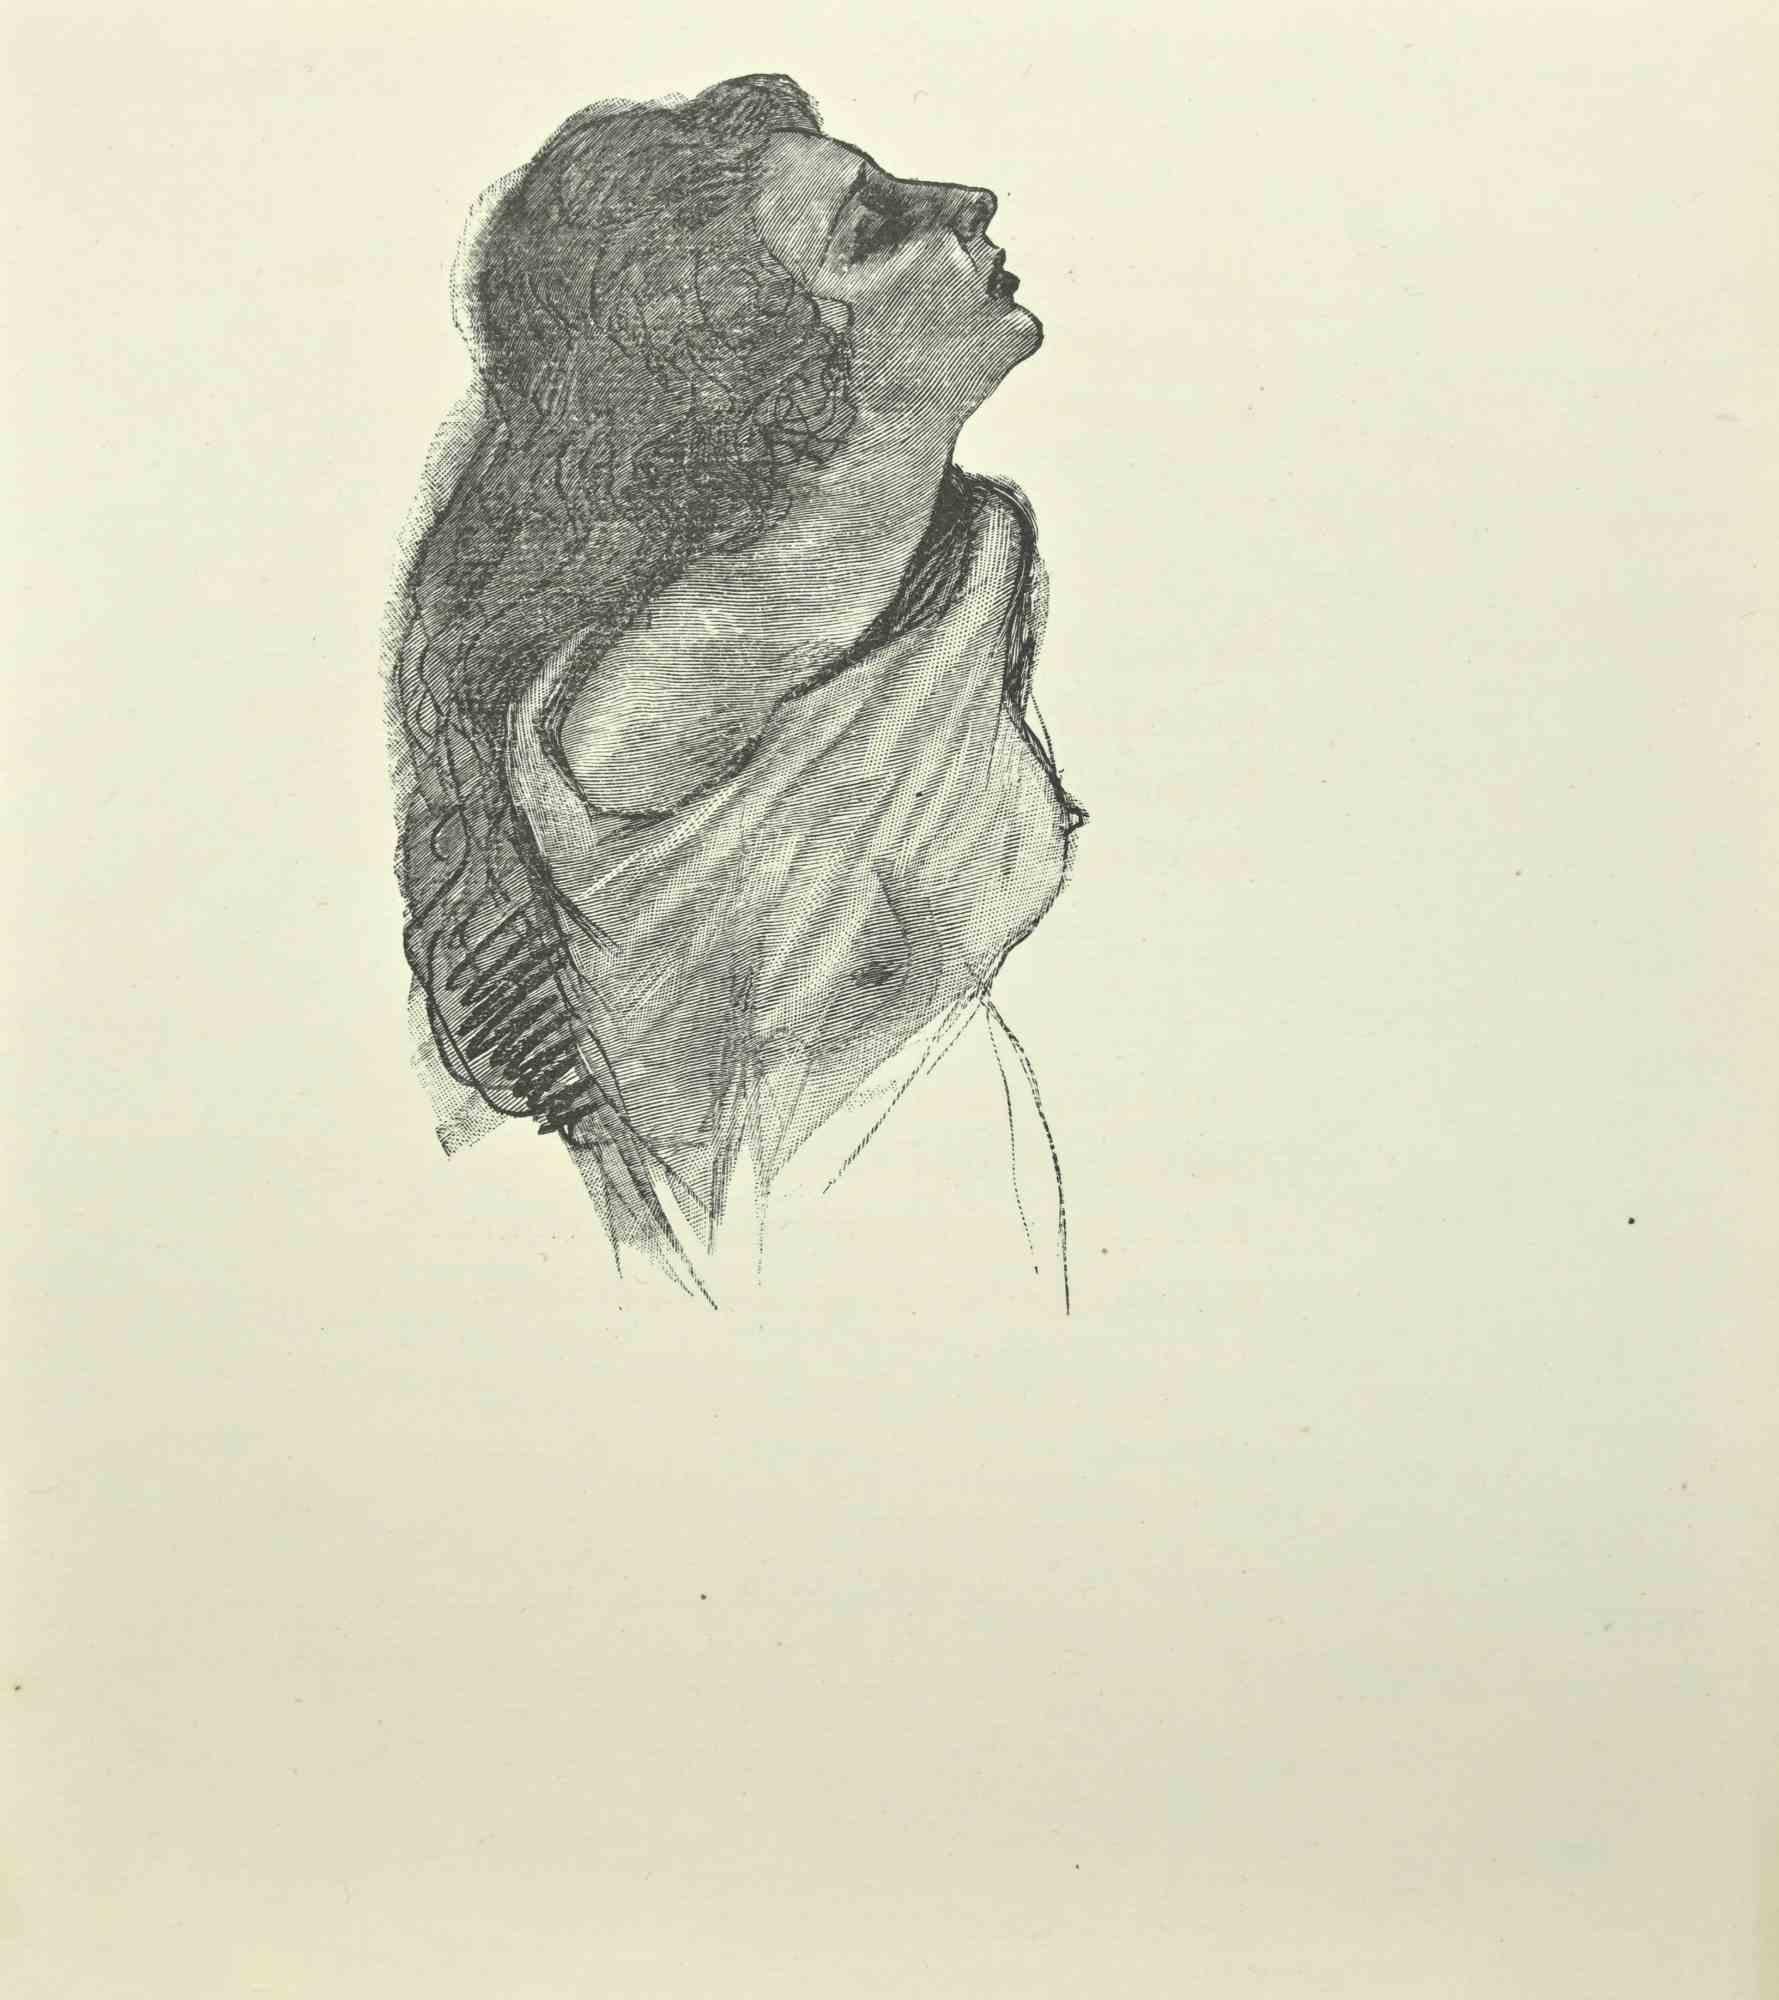 Unknown Portrait Print - Woman - Lithograph - 1970s